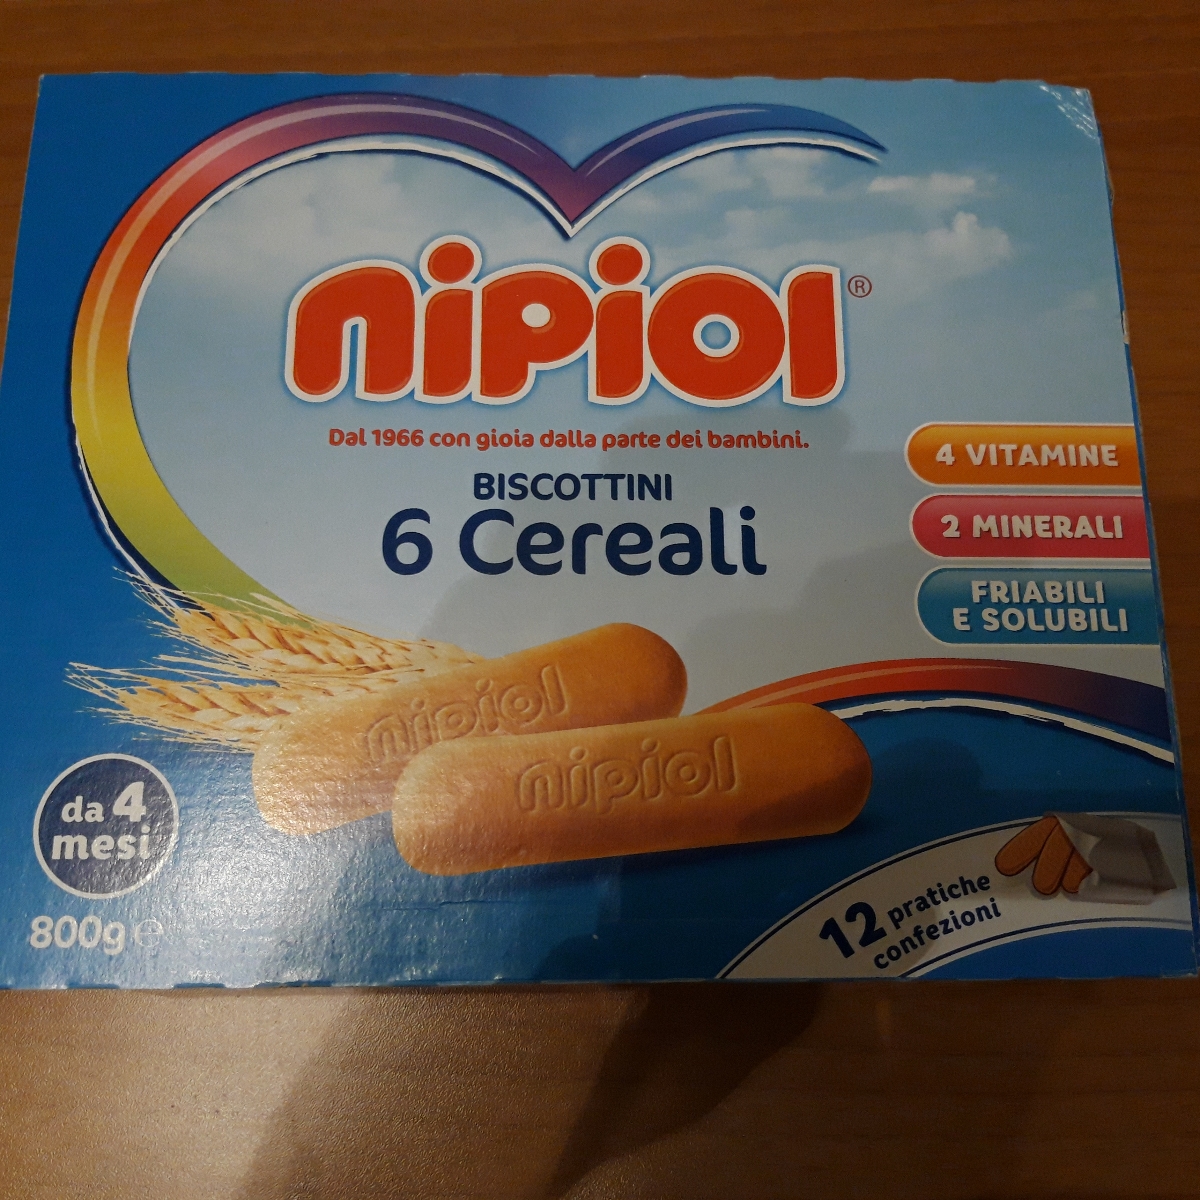 Nipiol Biscottini sei cereali Reviews